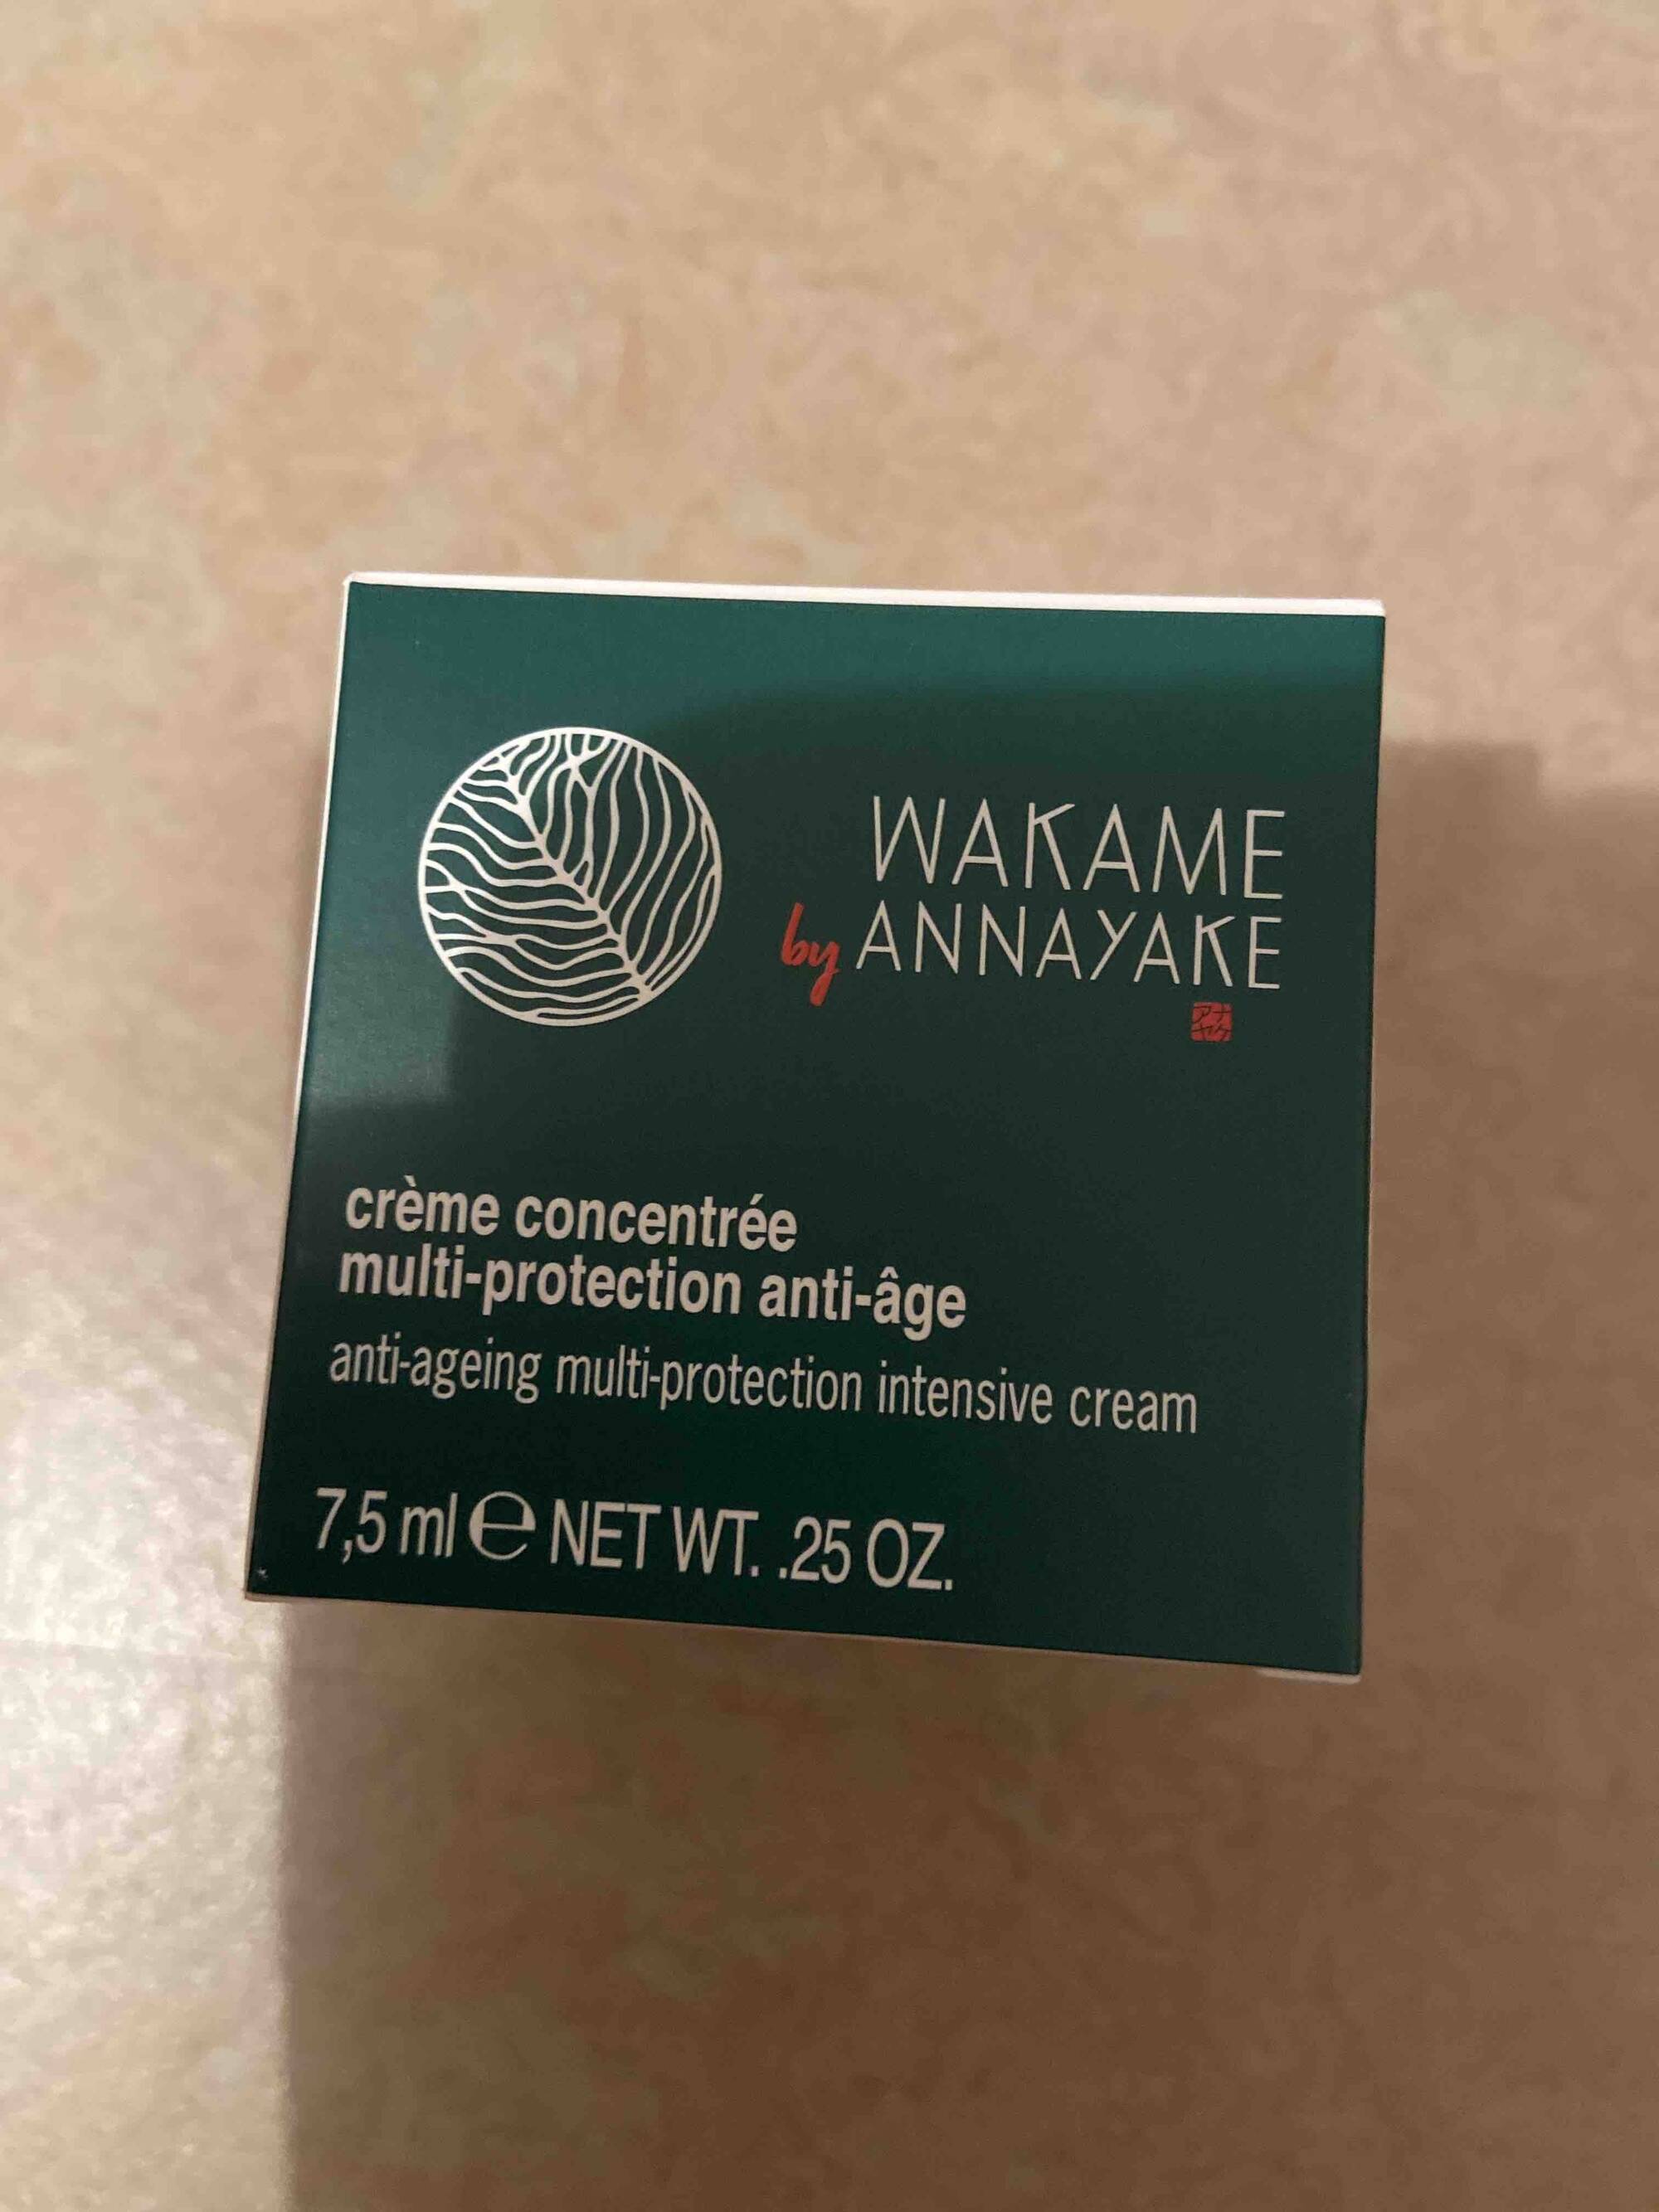 ANNAYAKE - Wakame - Crème concentrée multi-protection anti-âge